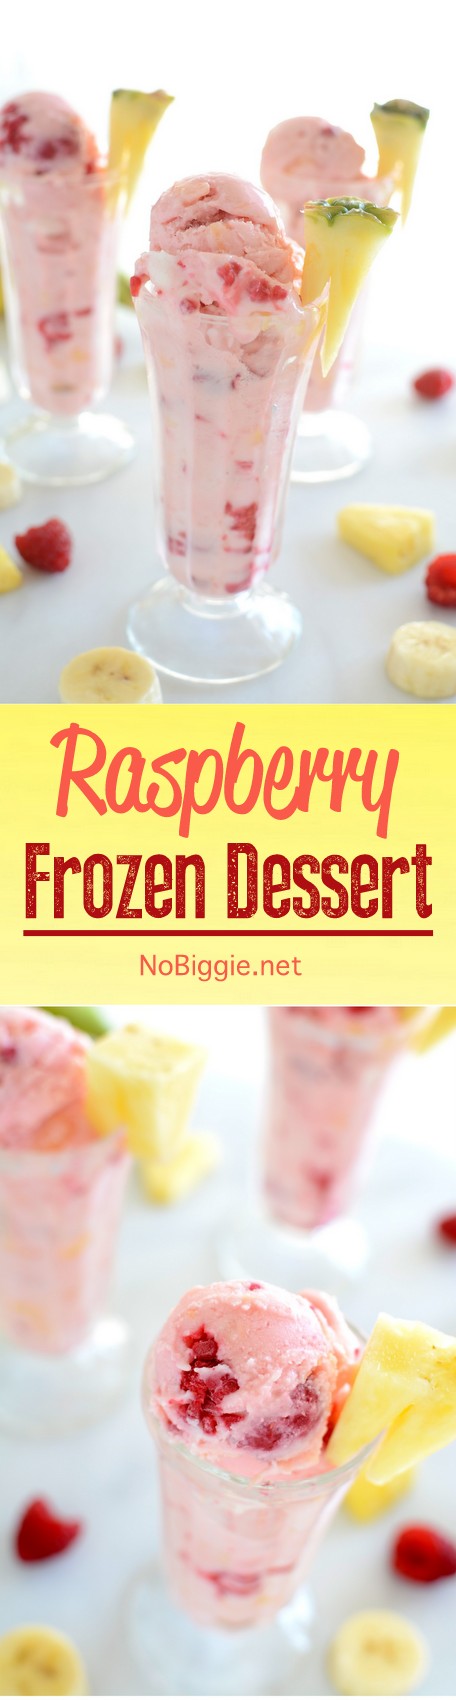 http://www.nobiggie.net/wp-content/uploads/2016/03/Raspberry-Frozen-Dessert.jpg